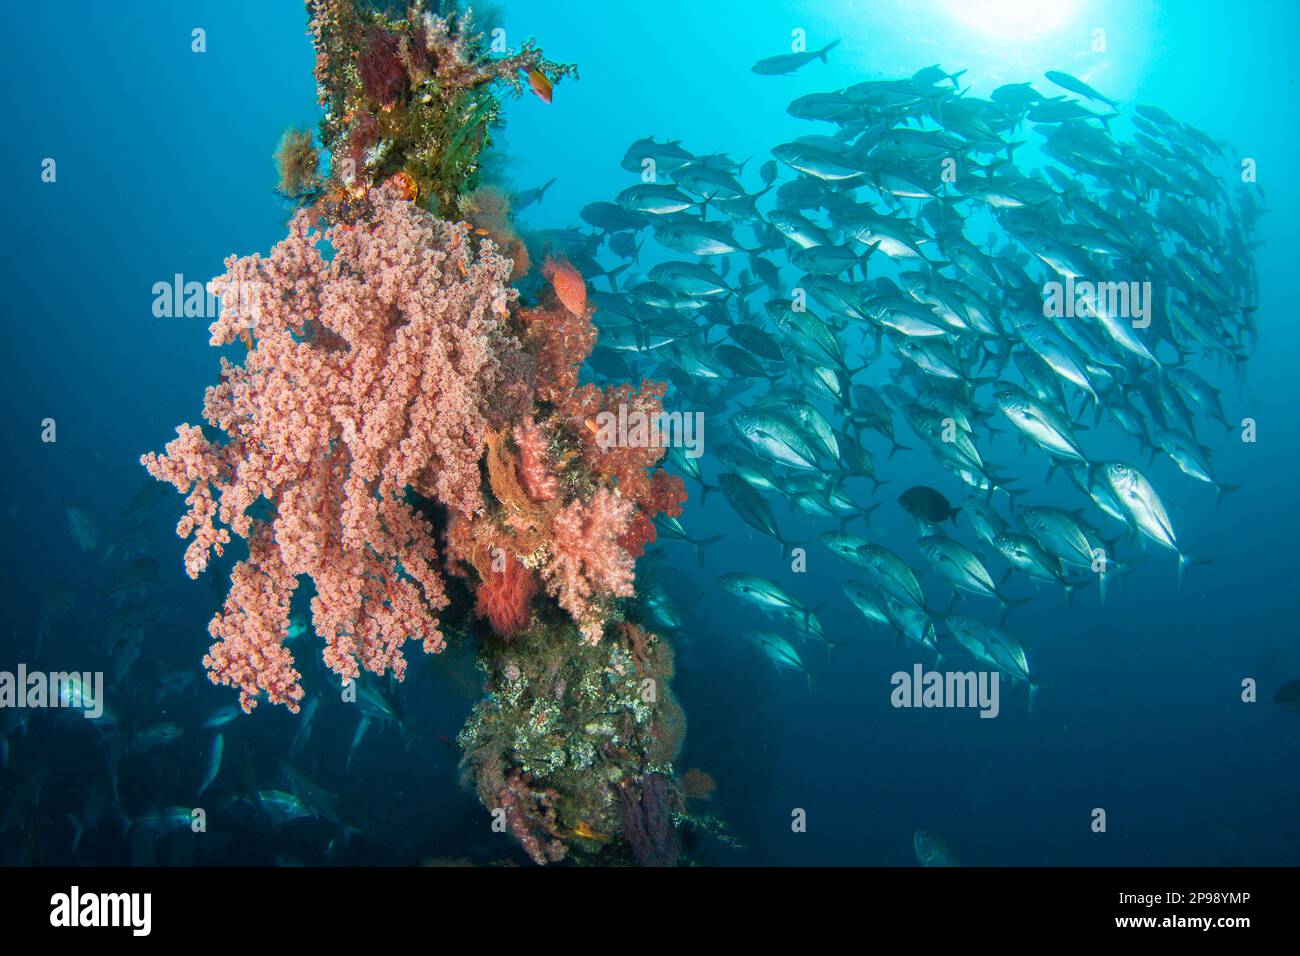 A school of bigeye jacks, Caranx sexfasciatus, and soft coral on a part of the Liberty wreck, Tulamben, Bali, Indonesia. Stock Photo